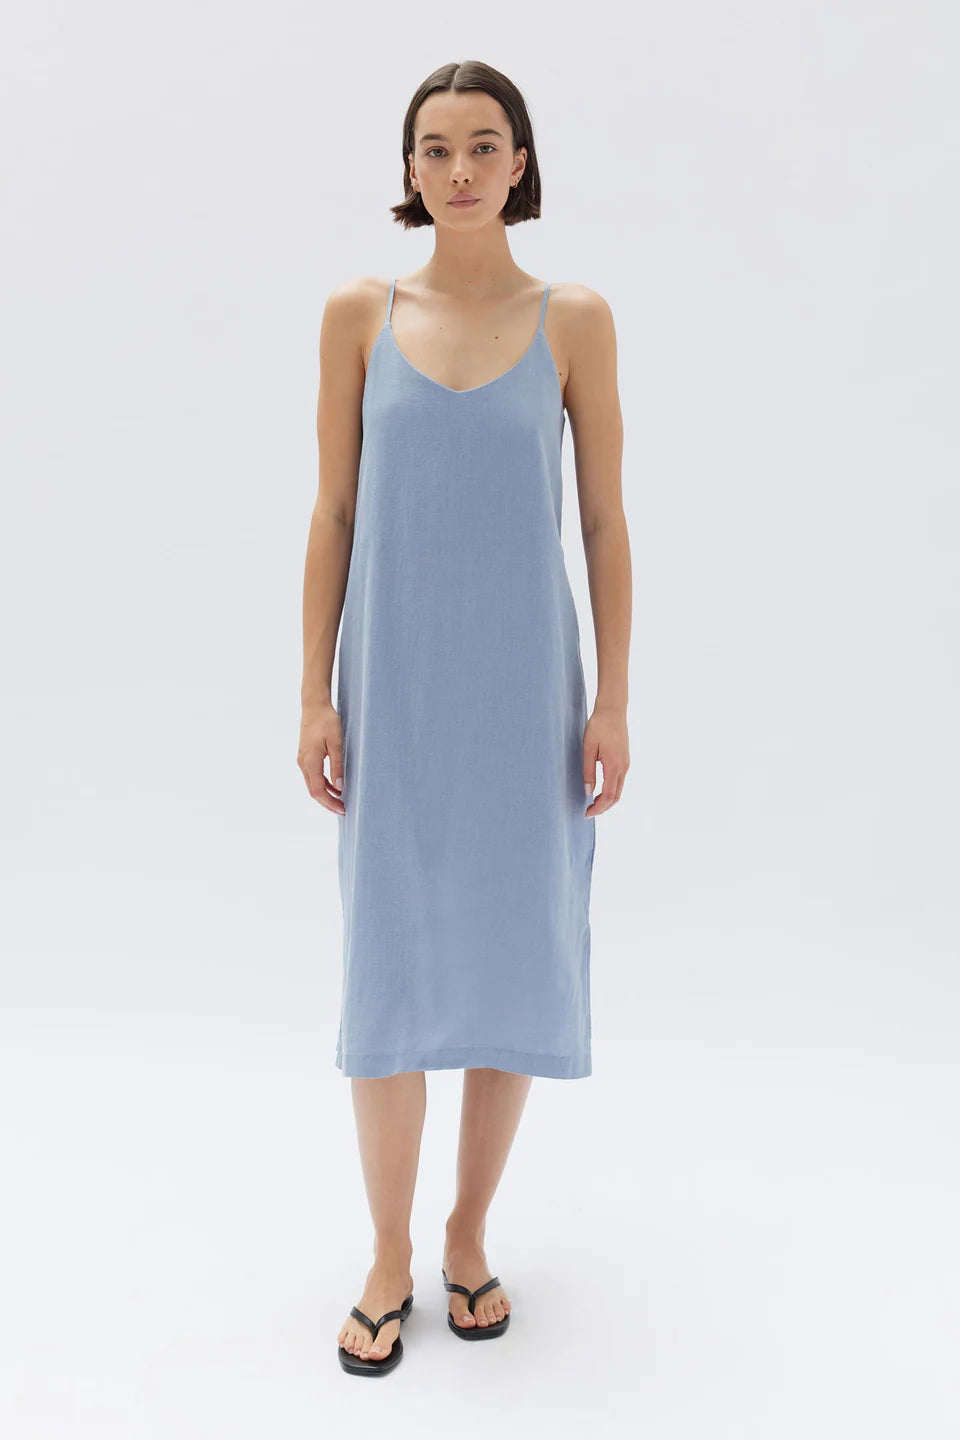 ASSEMBLY LABEL - Linen Slip Dress - Glacial